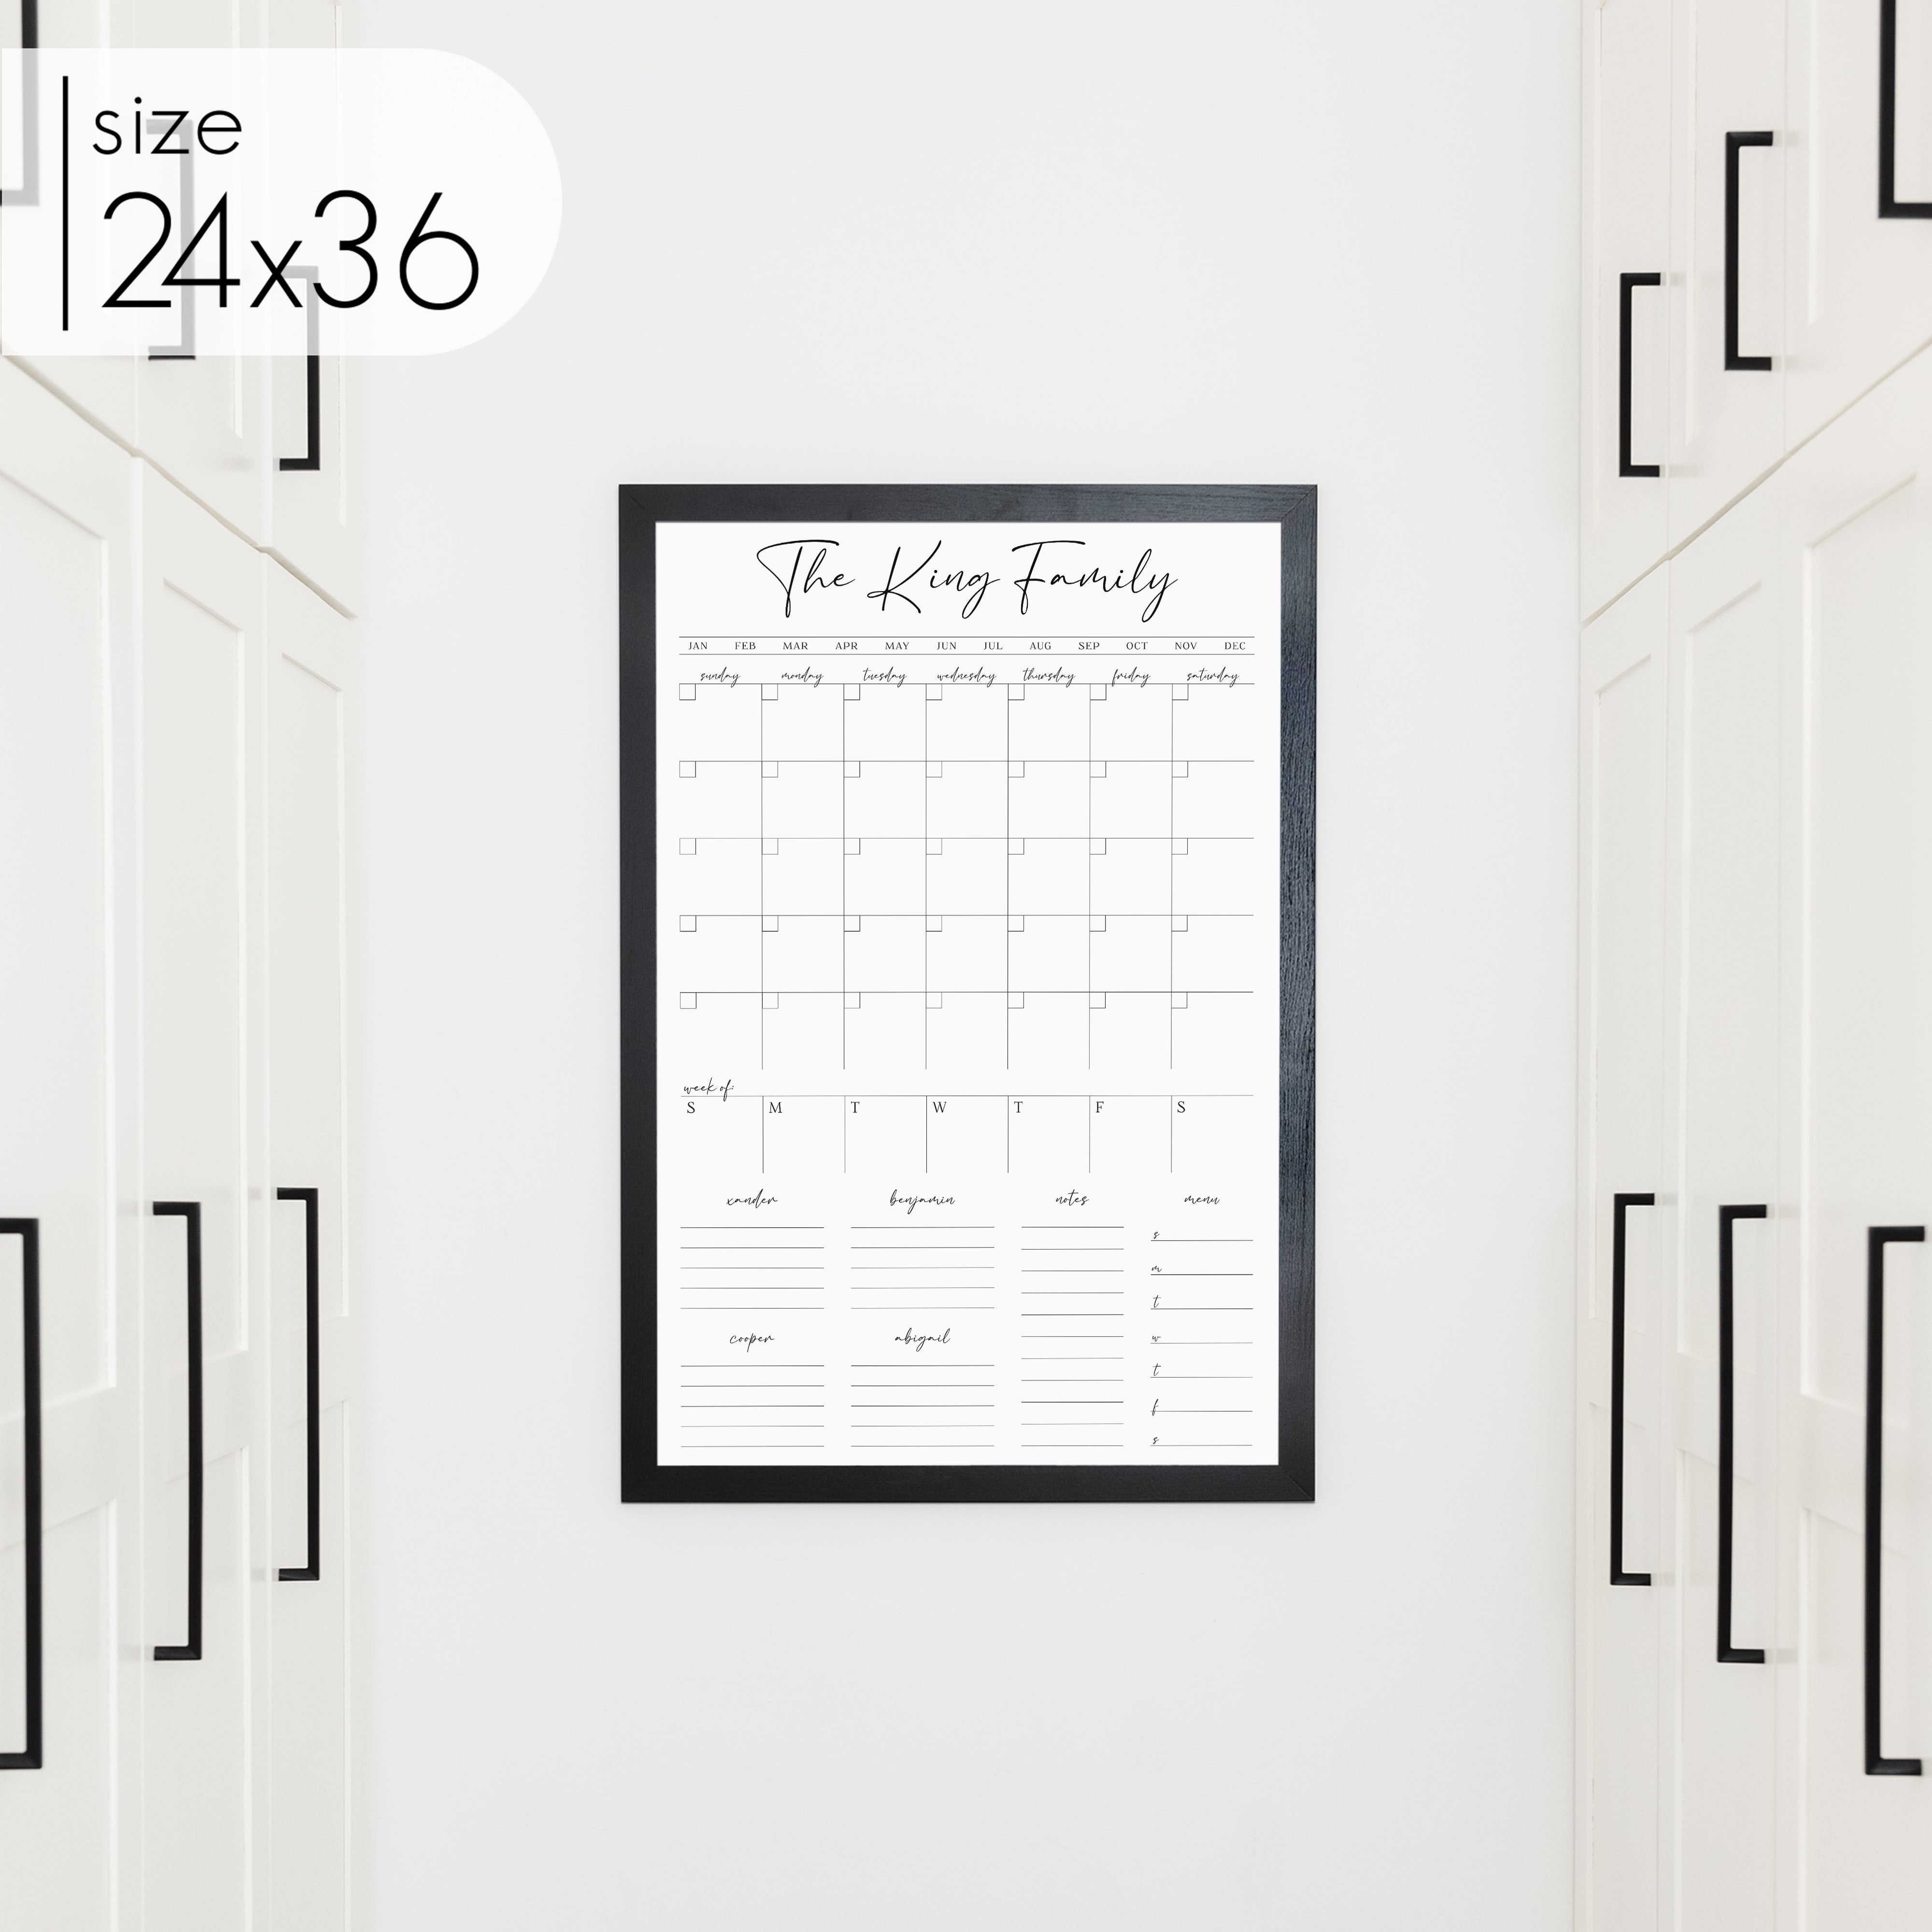 Week & Month Combo Framed Whiteboard + 6 sections | Vertical Pennington